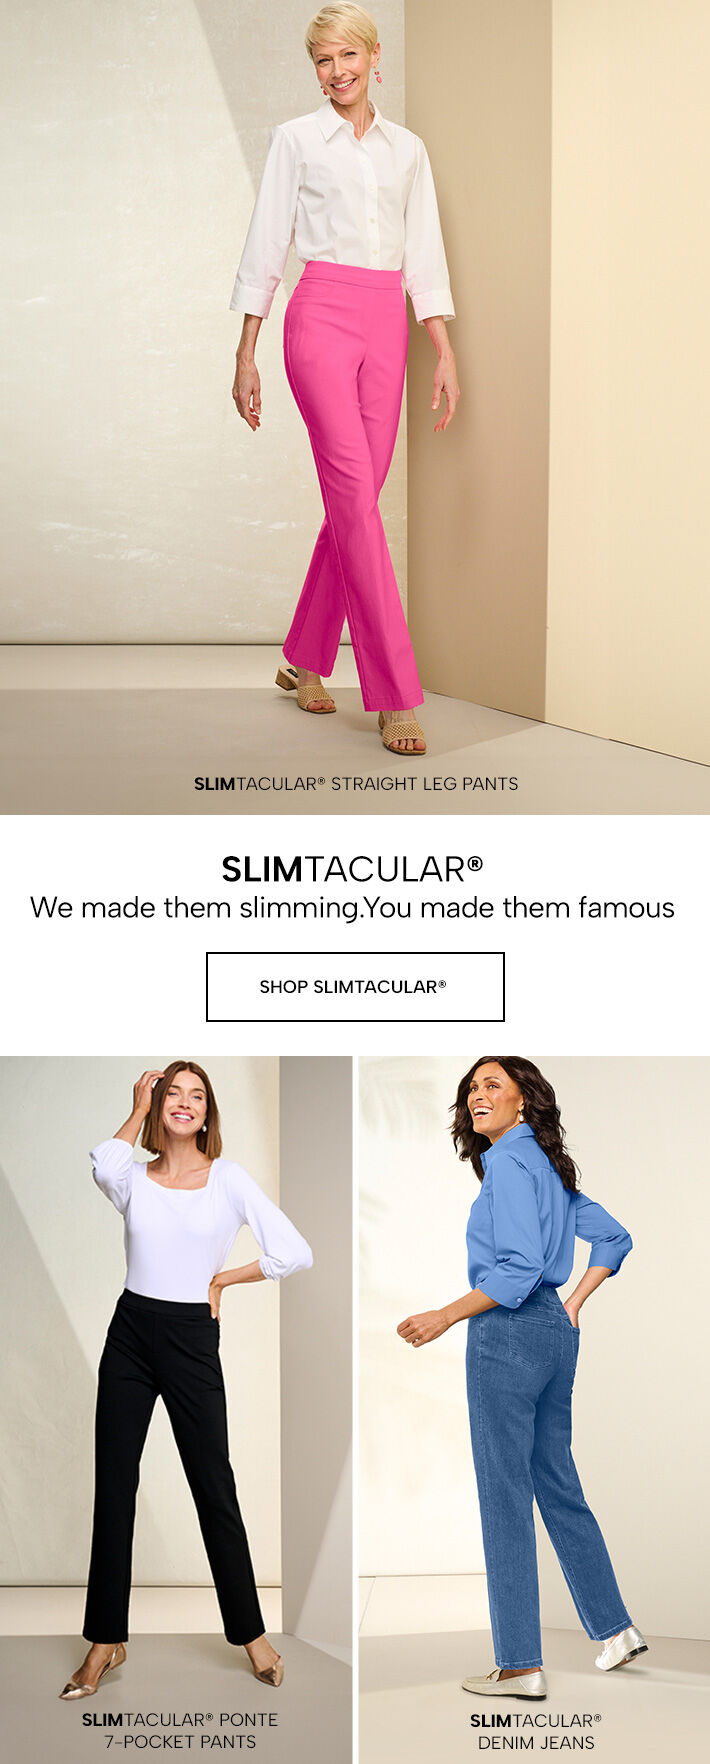 Slimtacular - We made them slimming, you made them famous. Shop Slimtacular